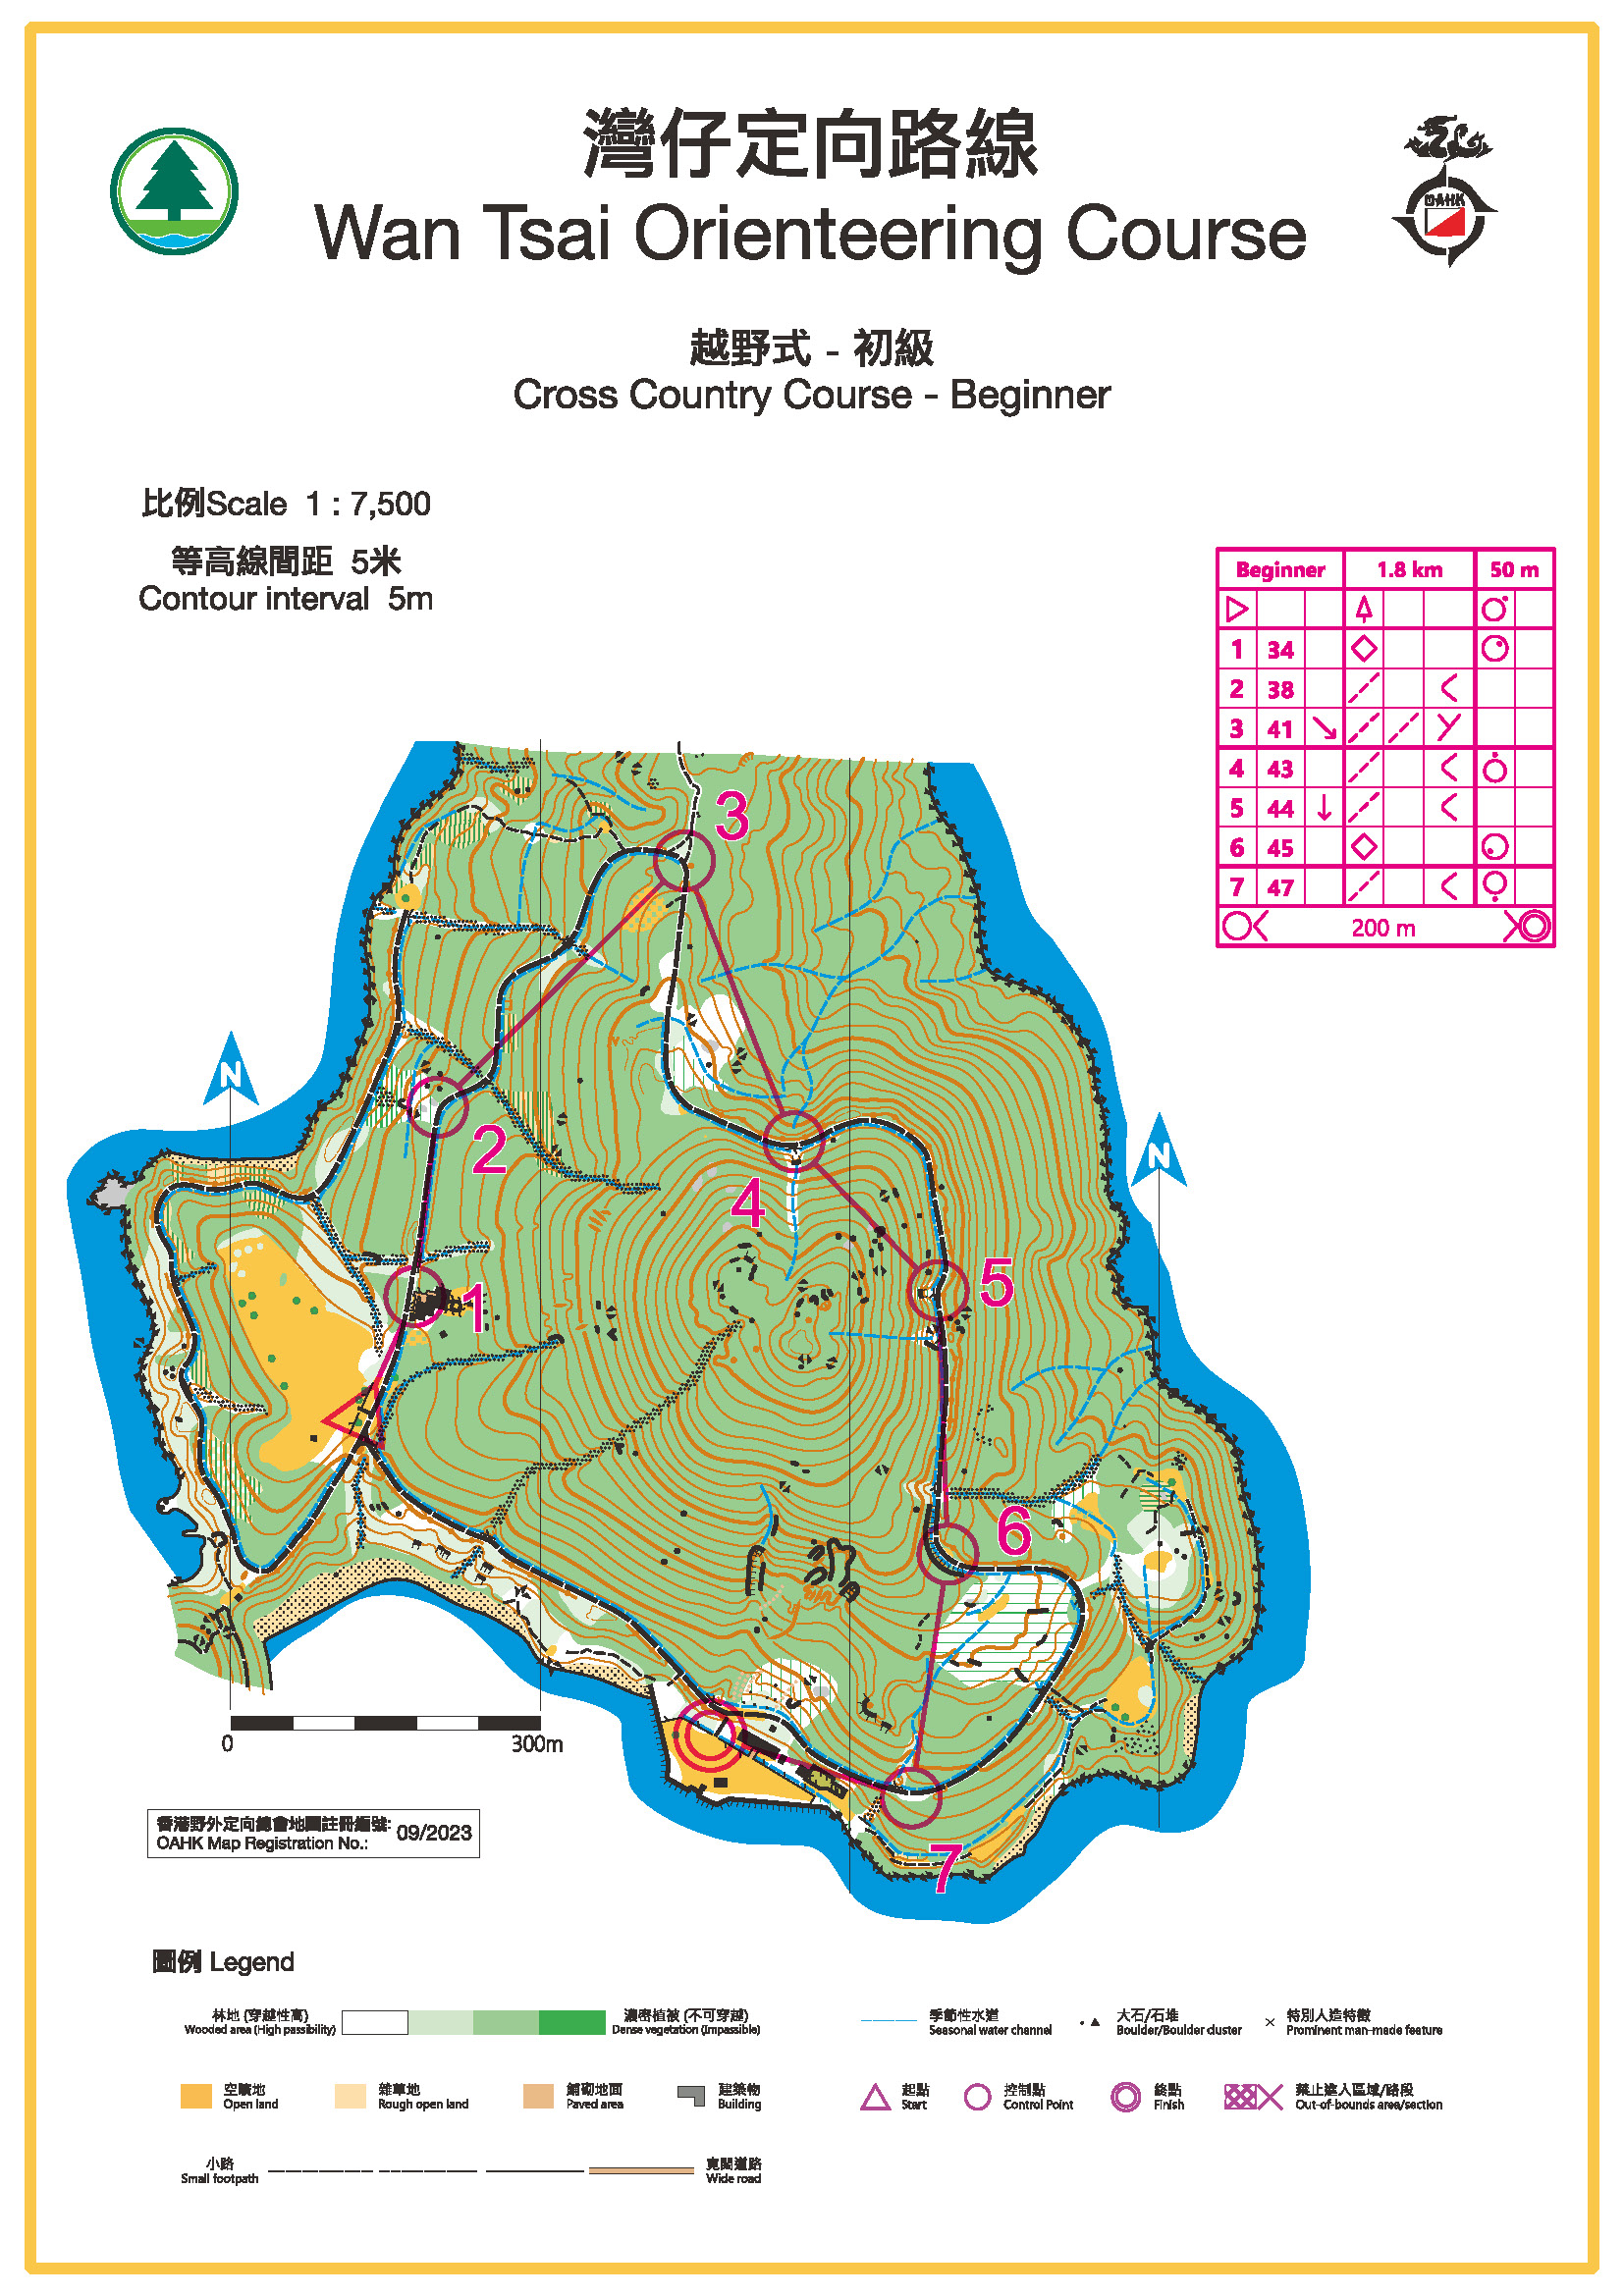 Map for Wan Tsai Orienteering Course - Beginner